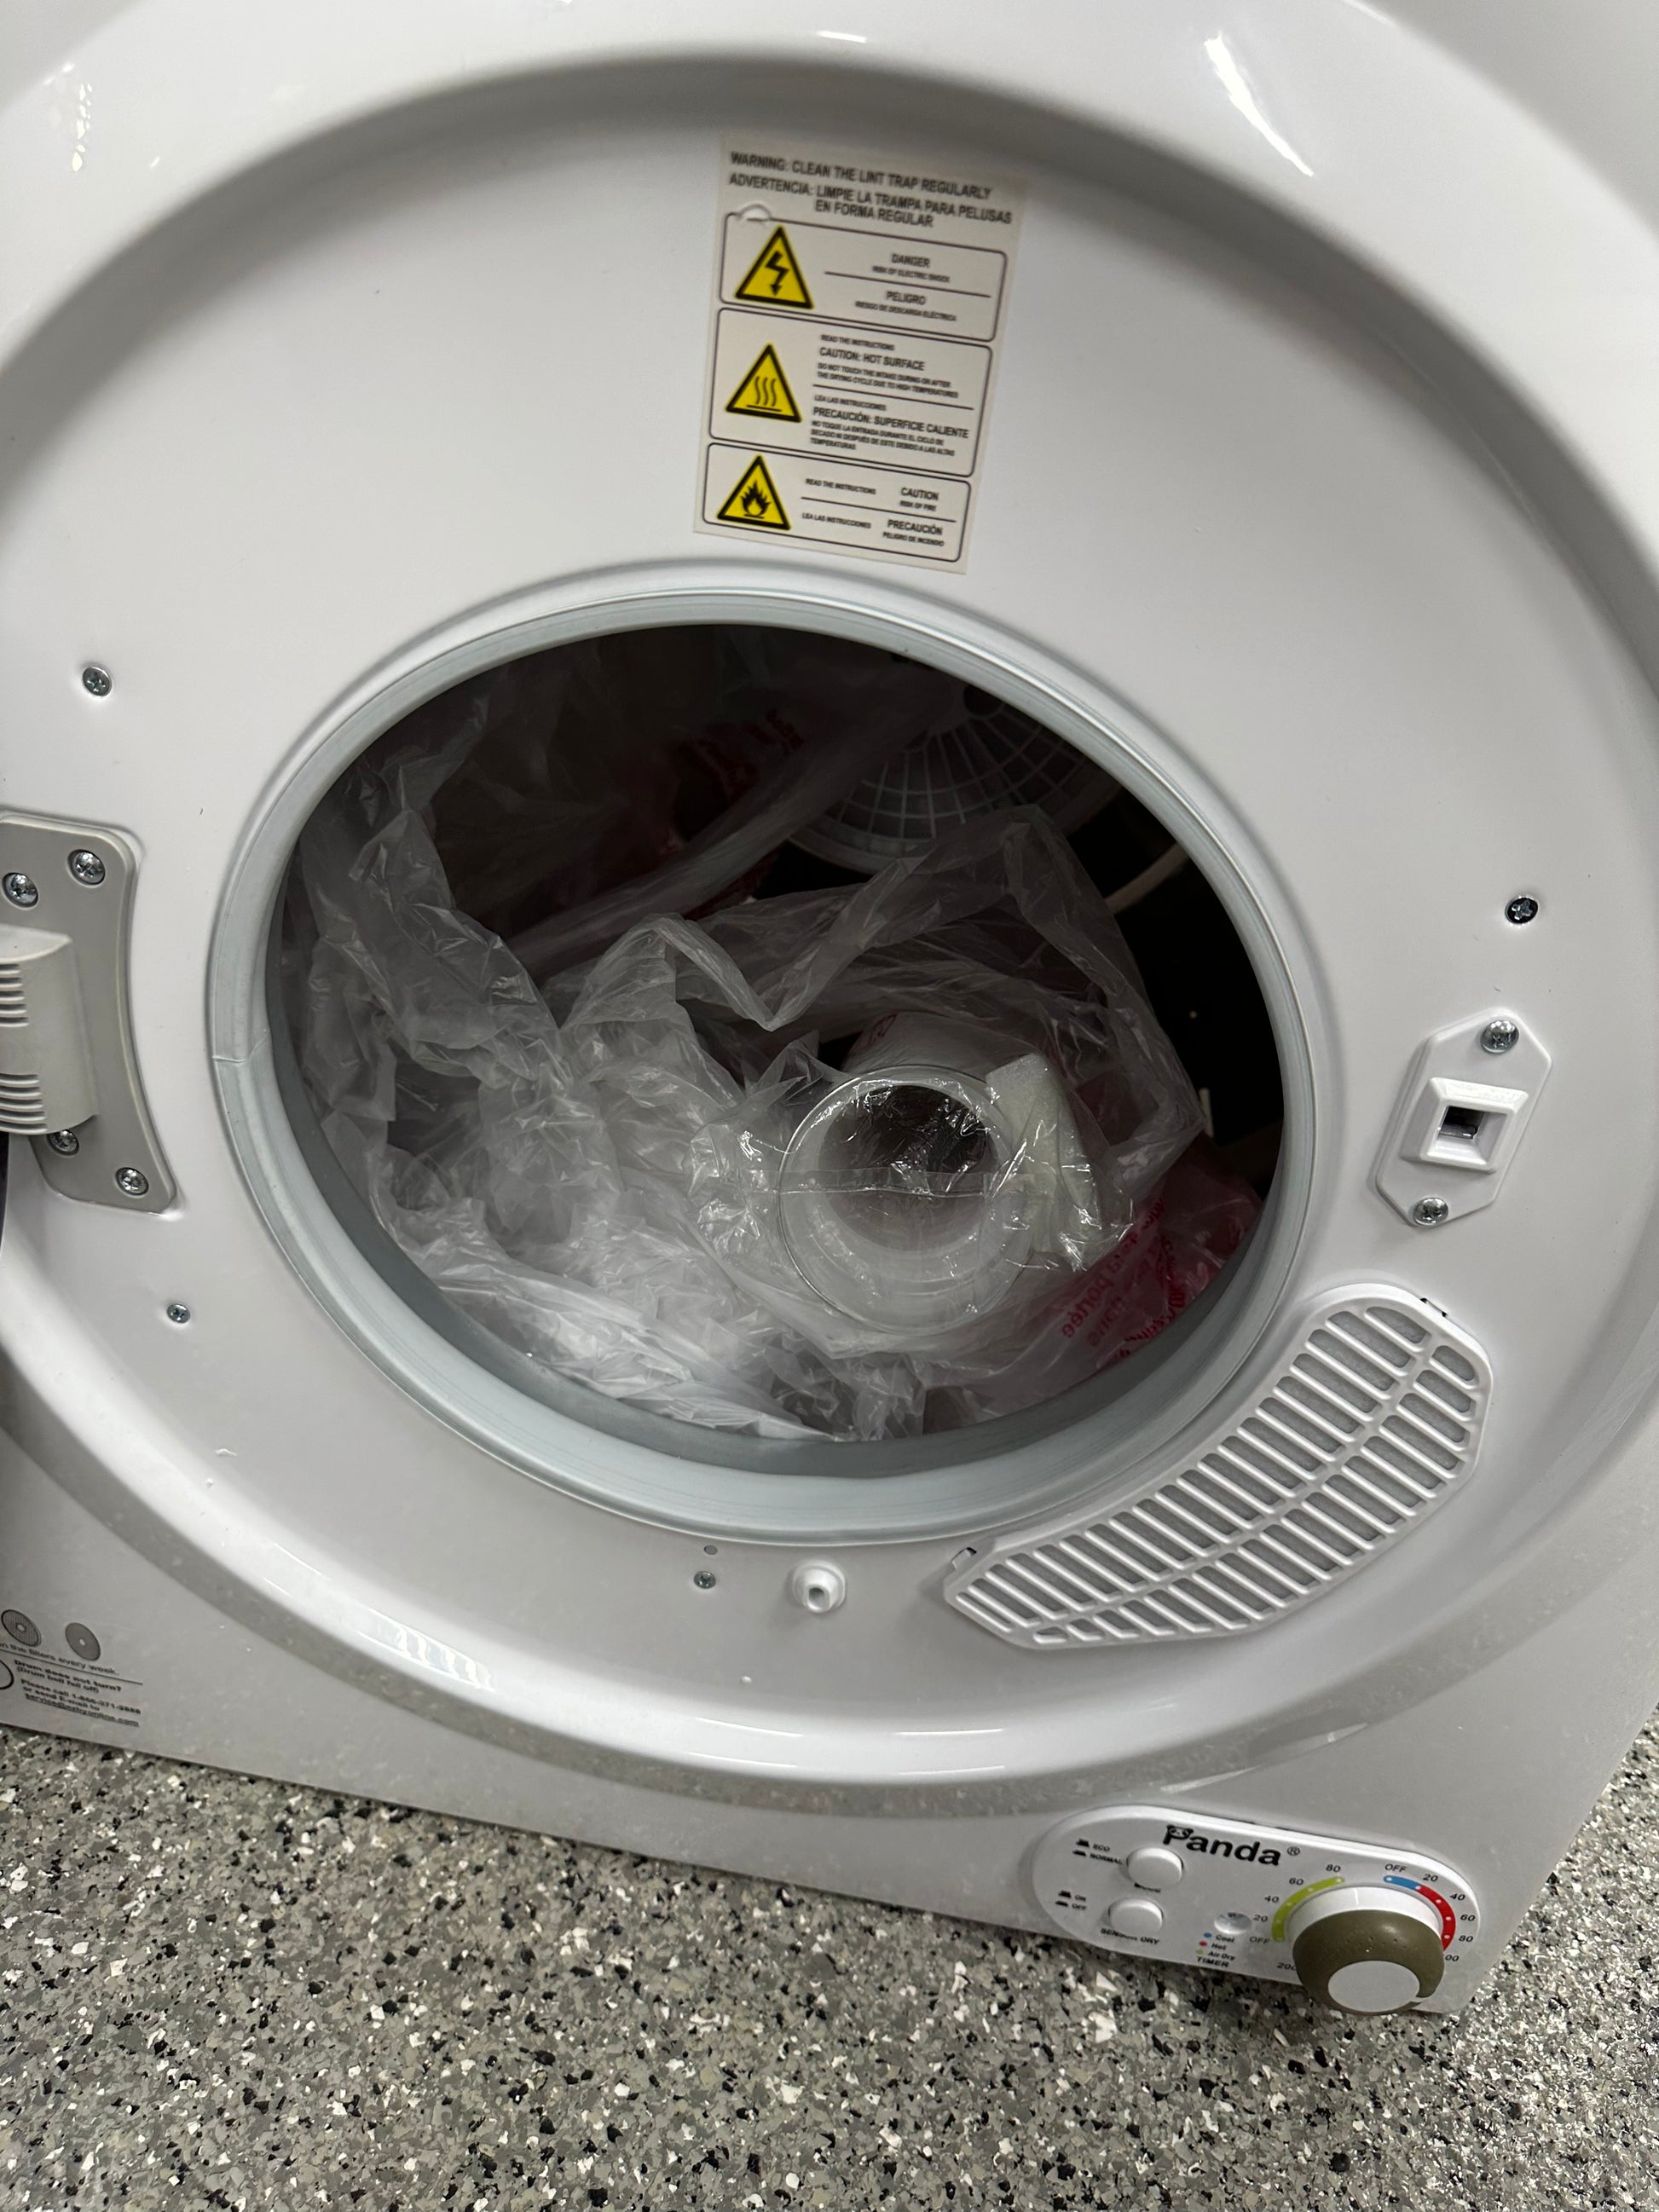 Panda Portable Dryer in a Motorhome/RV - 3.5 cu.ft, 13lbs Capacity